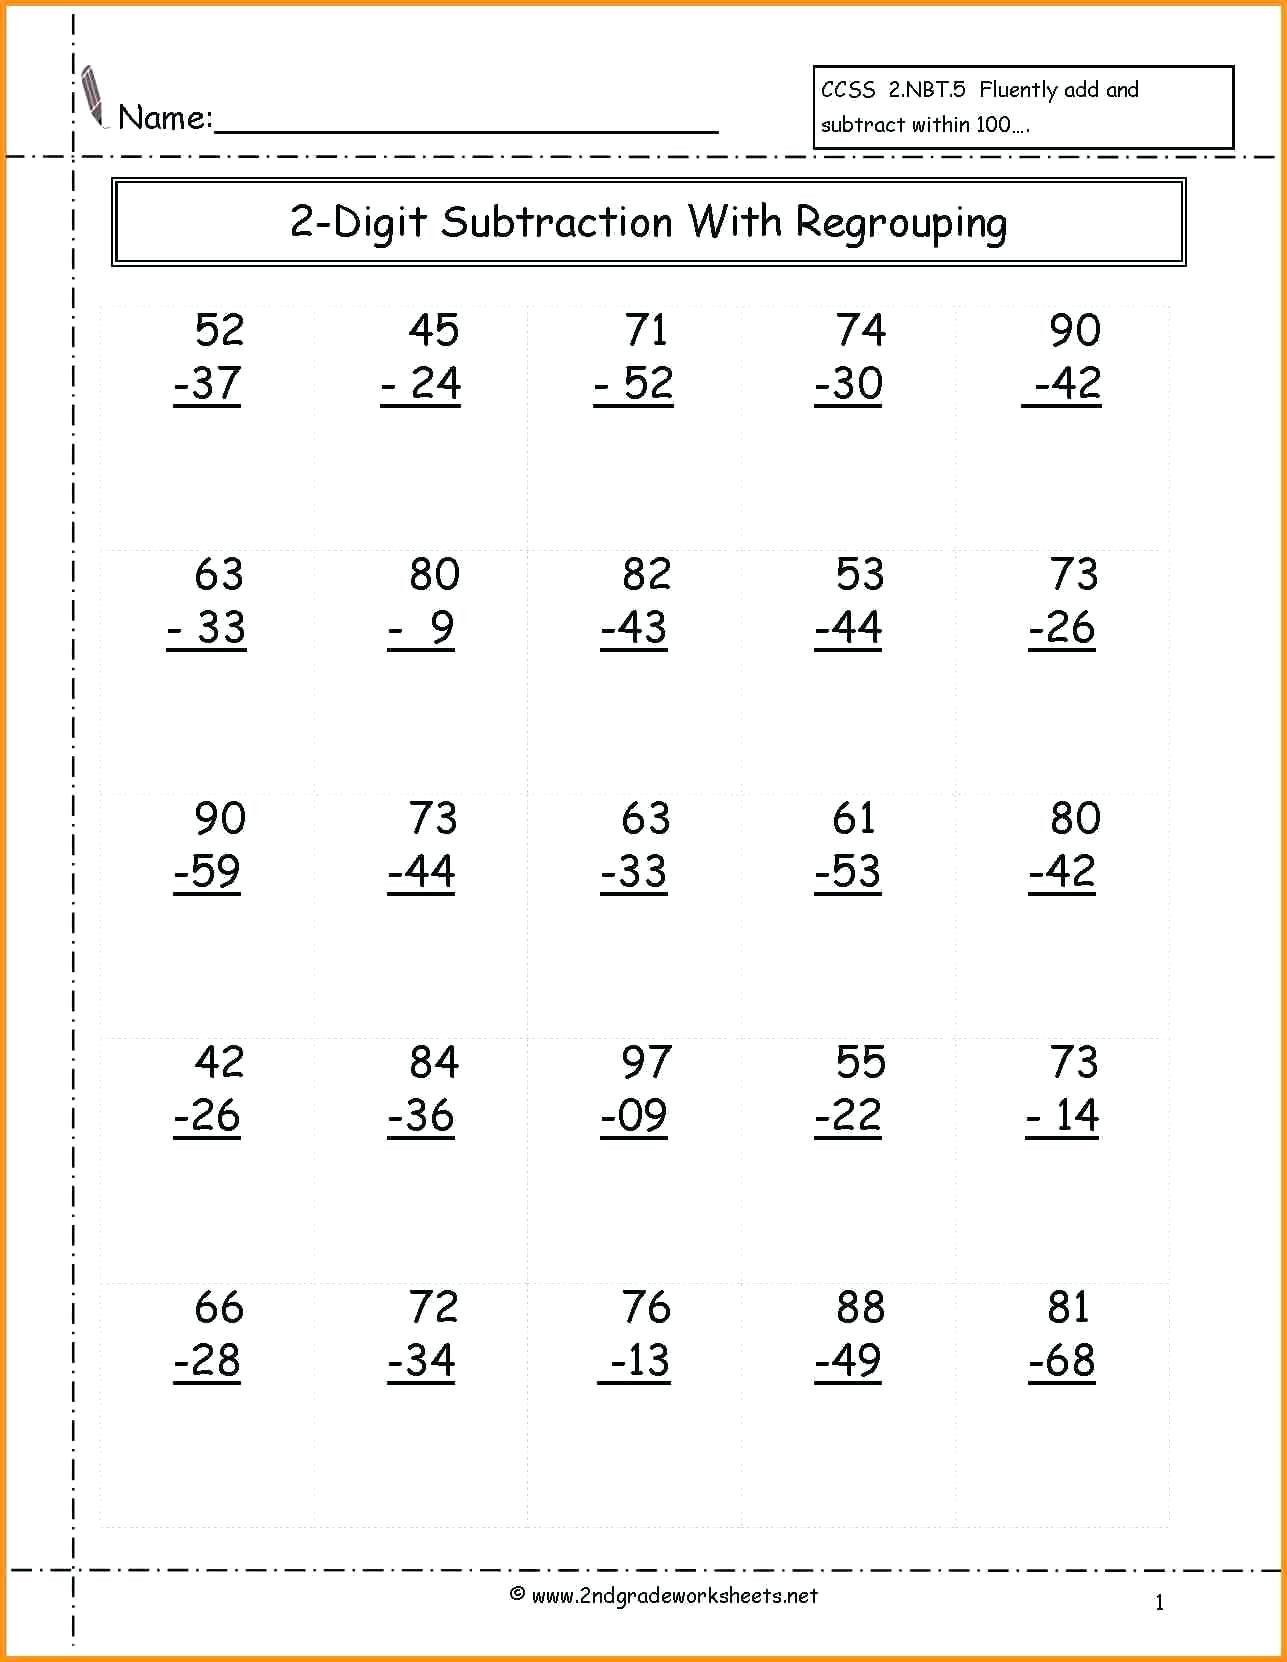 Subtraction Worksheets 1st Grade 4 Free Math Worksheets First Grade 1 Subtraction Subtract 1